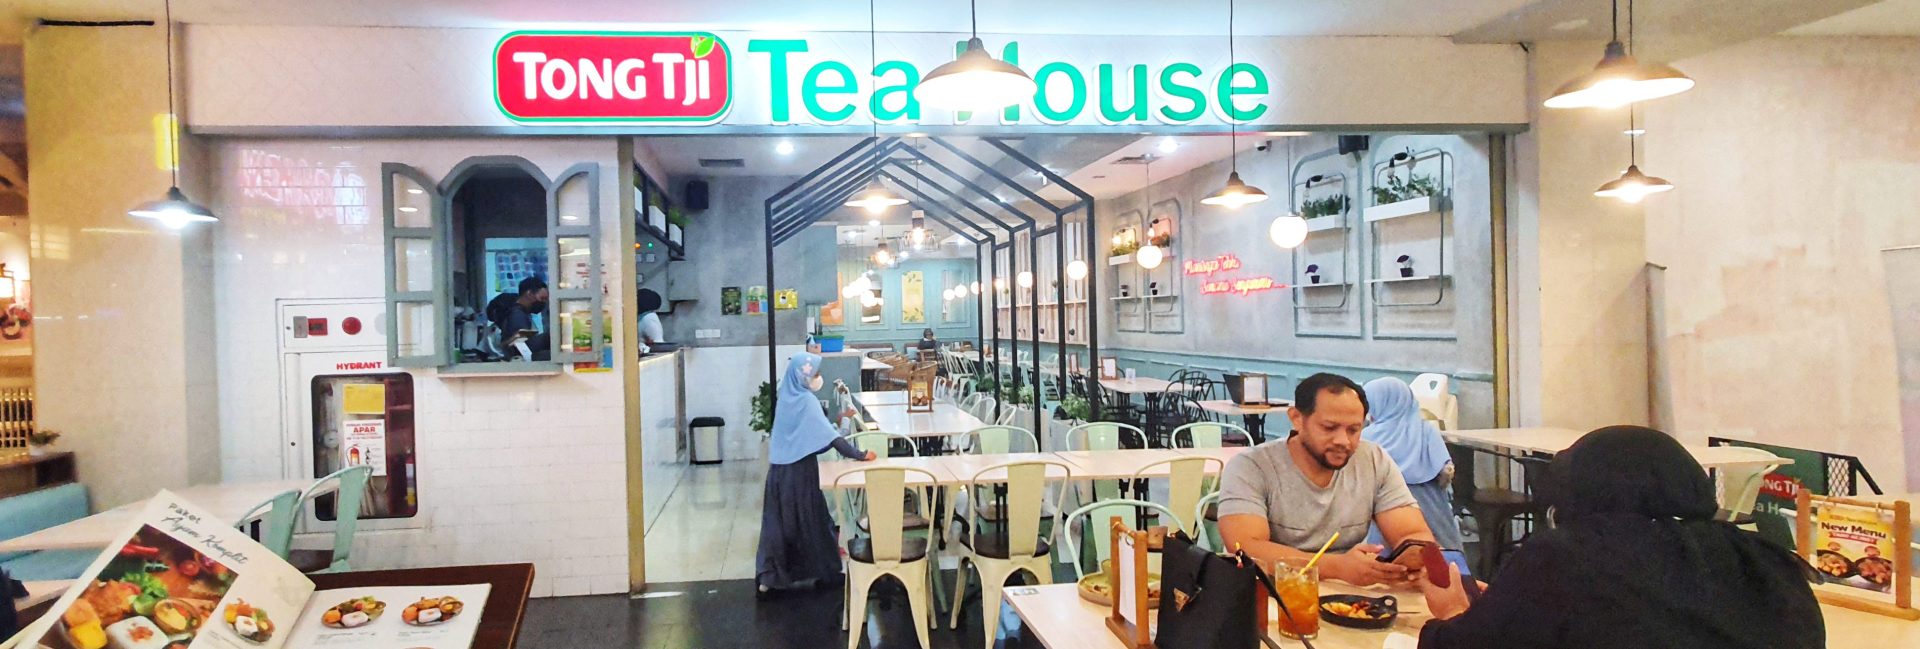 Tong Tji Tea House Dmall